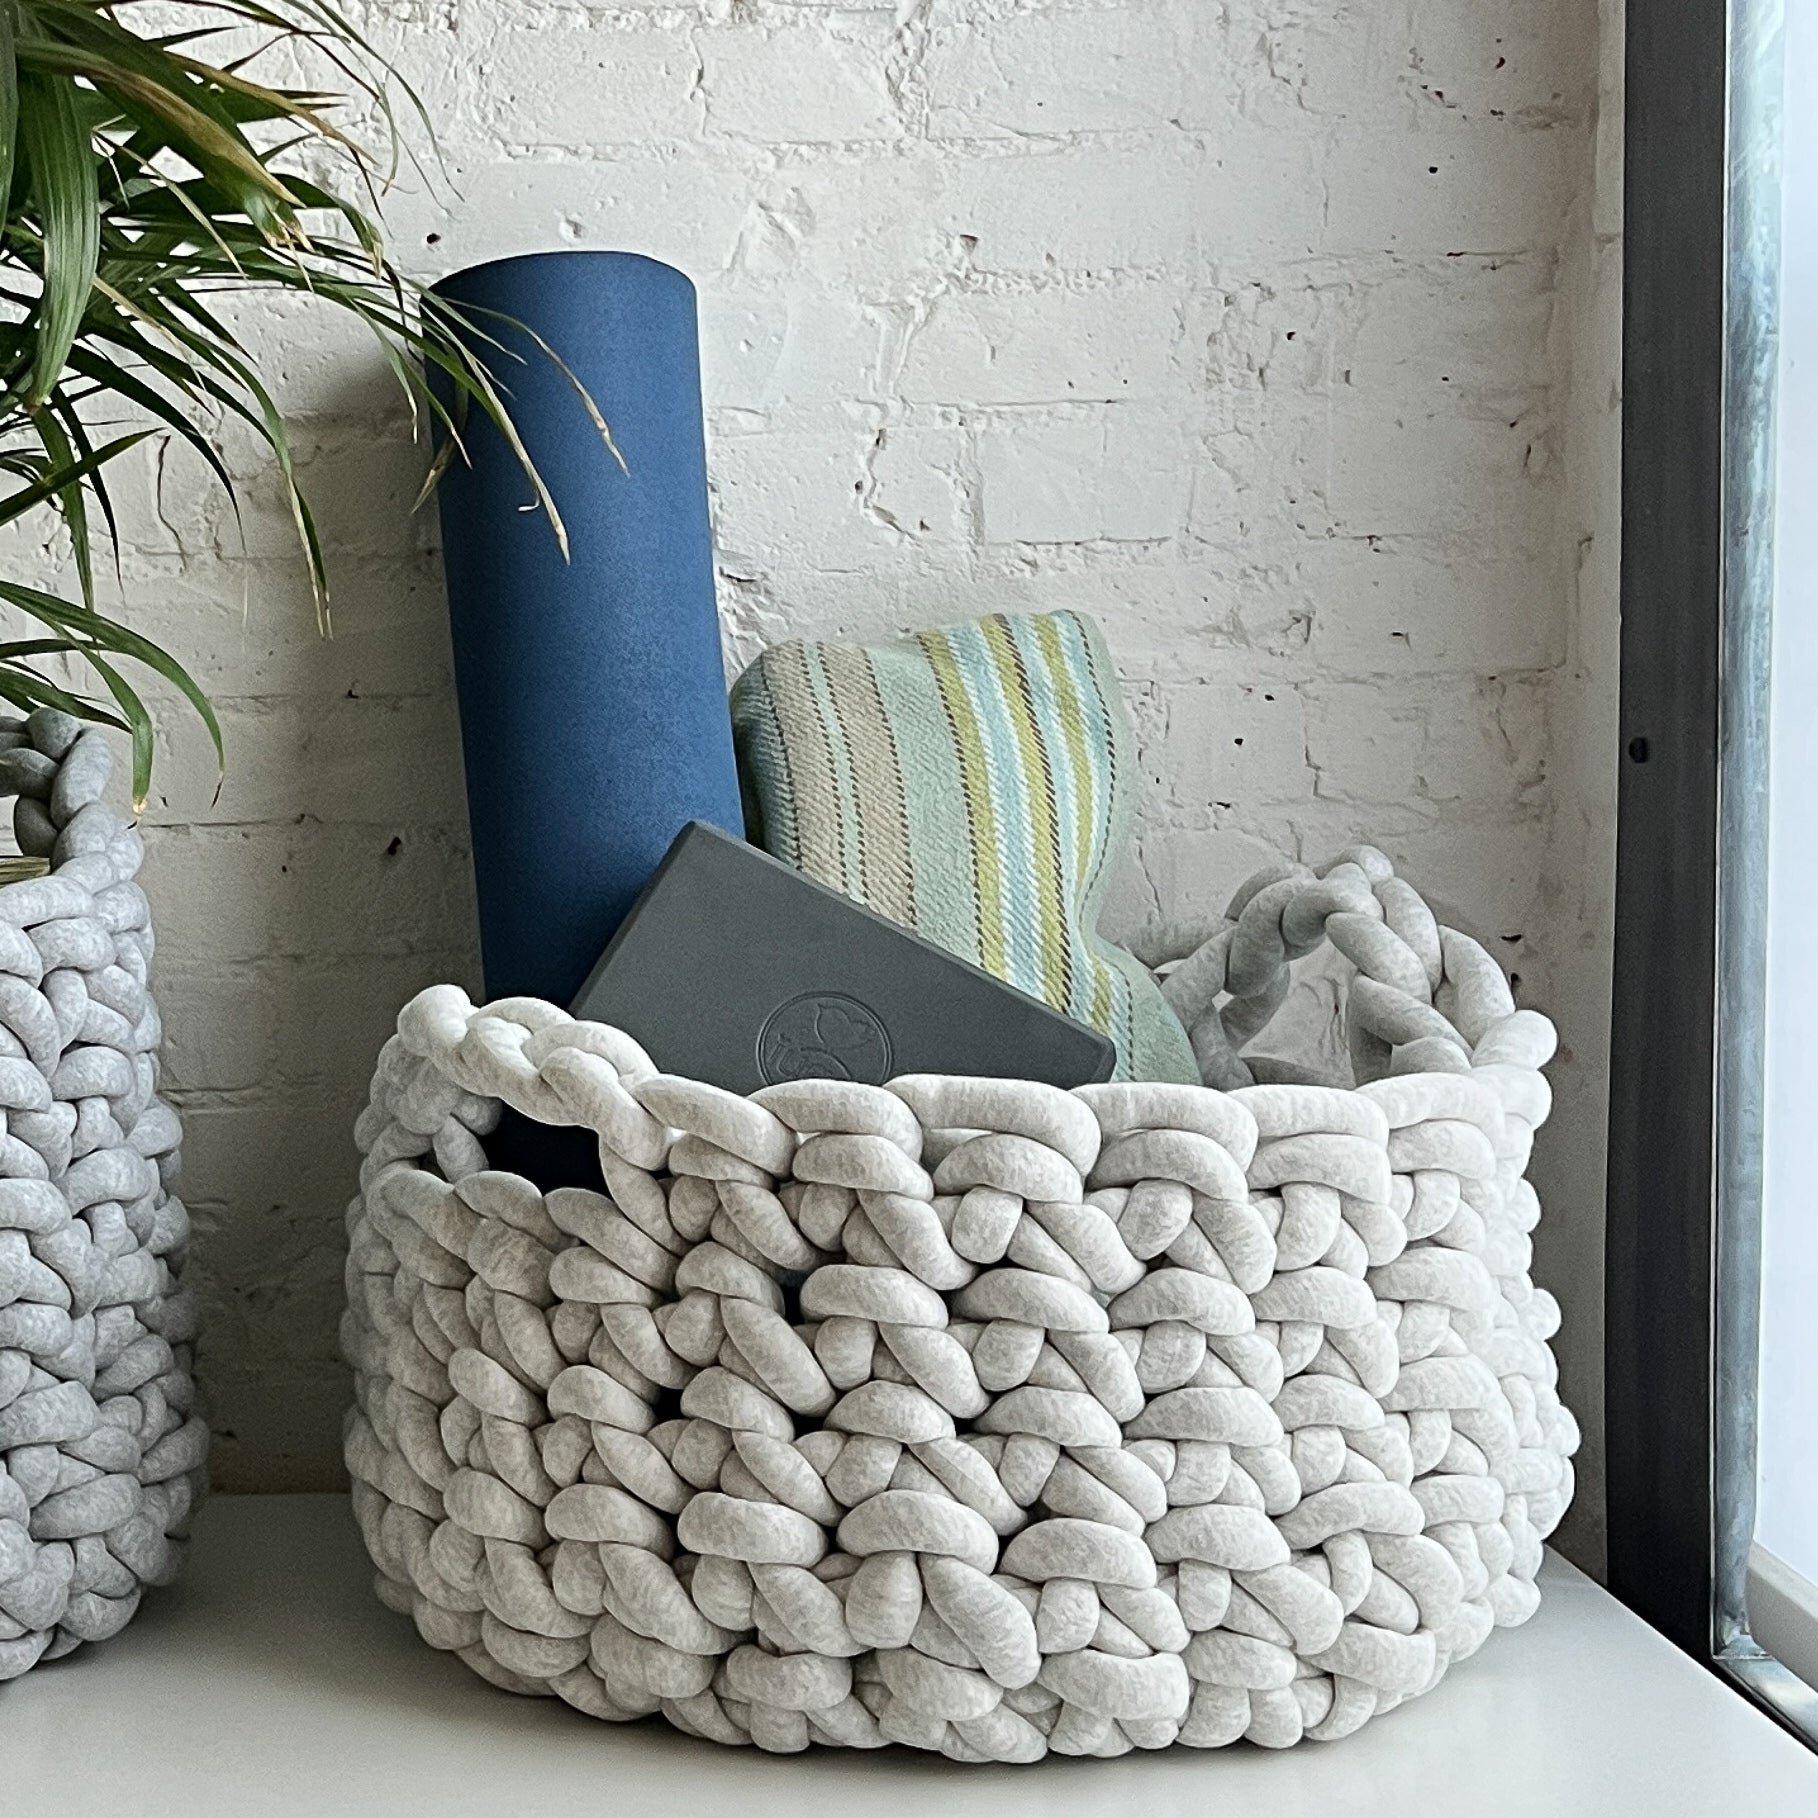 Christa Crochet Baskets Pattern